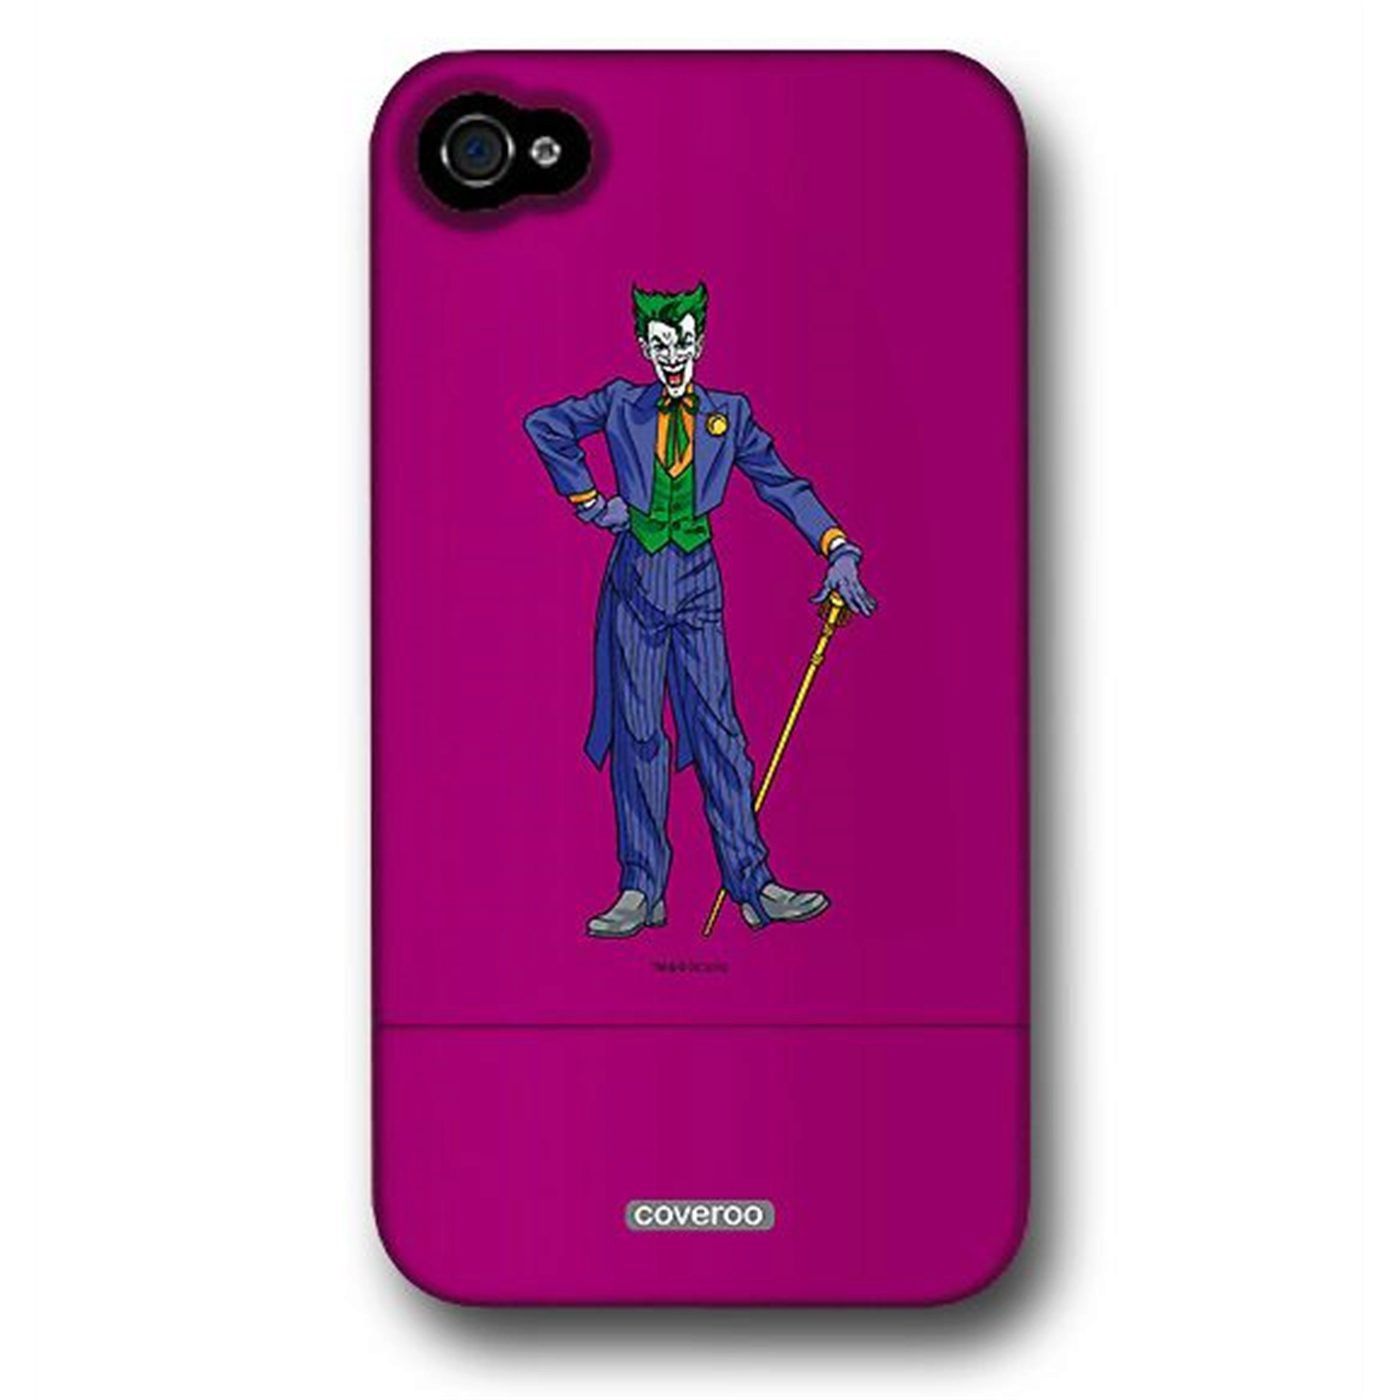 Joker With Cane iPhone 4 Slider Case